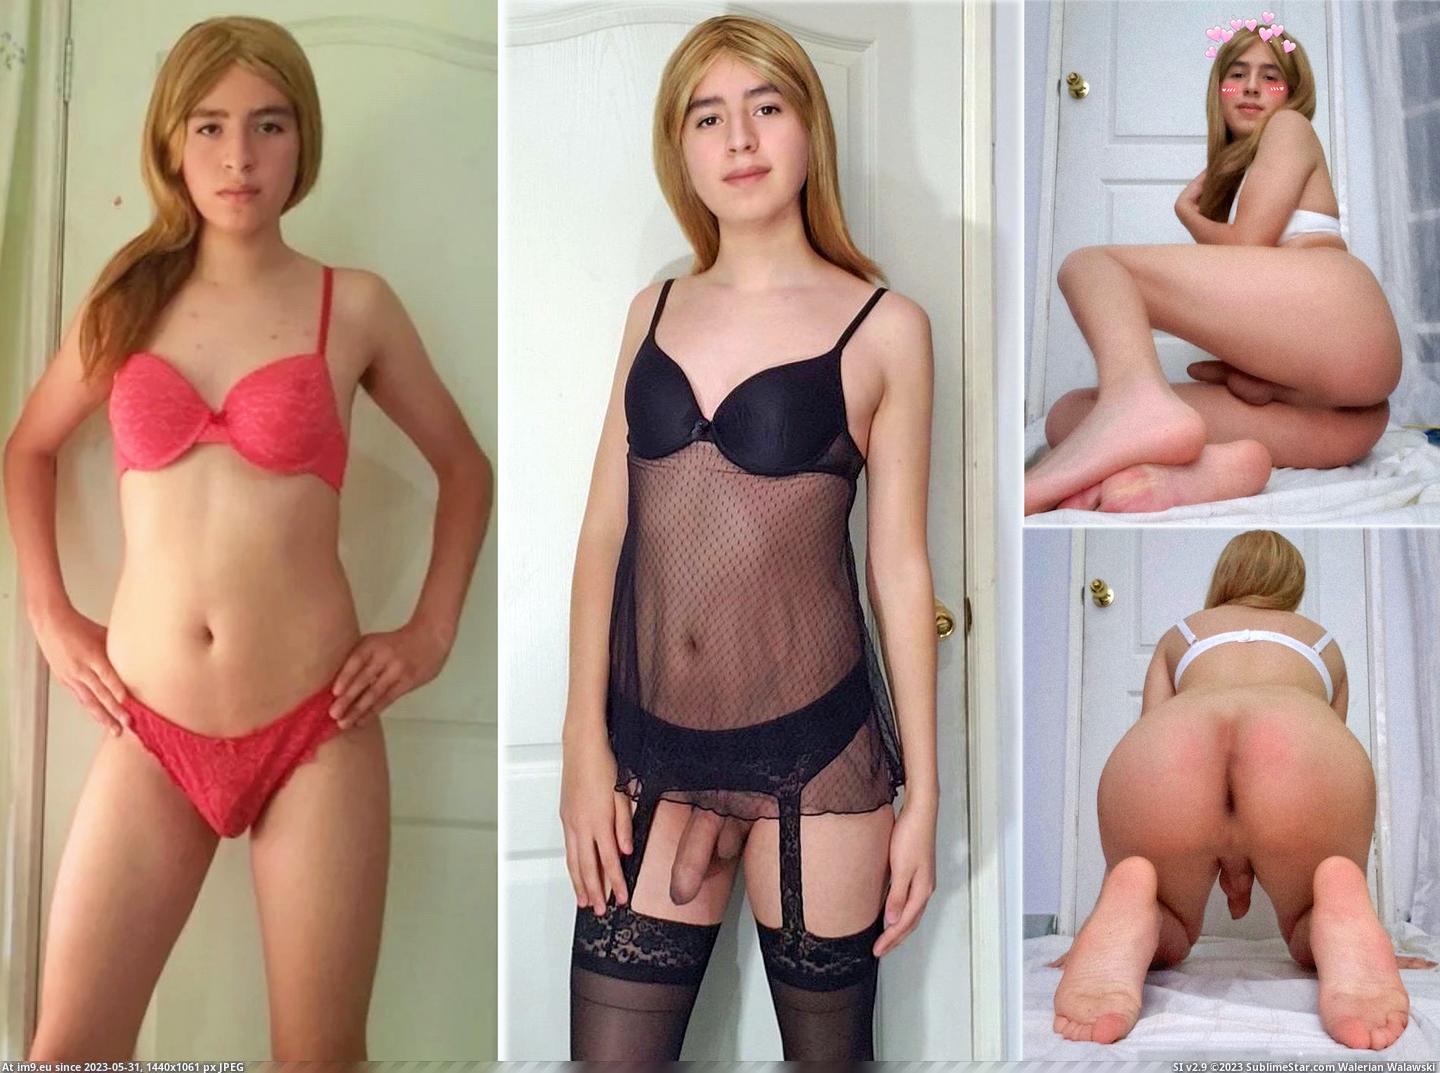 #Ass #Amateur #Tgirl #Tranny #Transgender #Blonde #Shemale 1175463 Pic. (Bild von album Instant Upload))